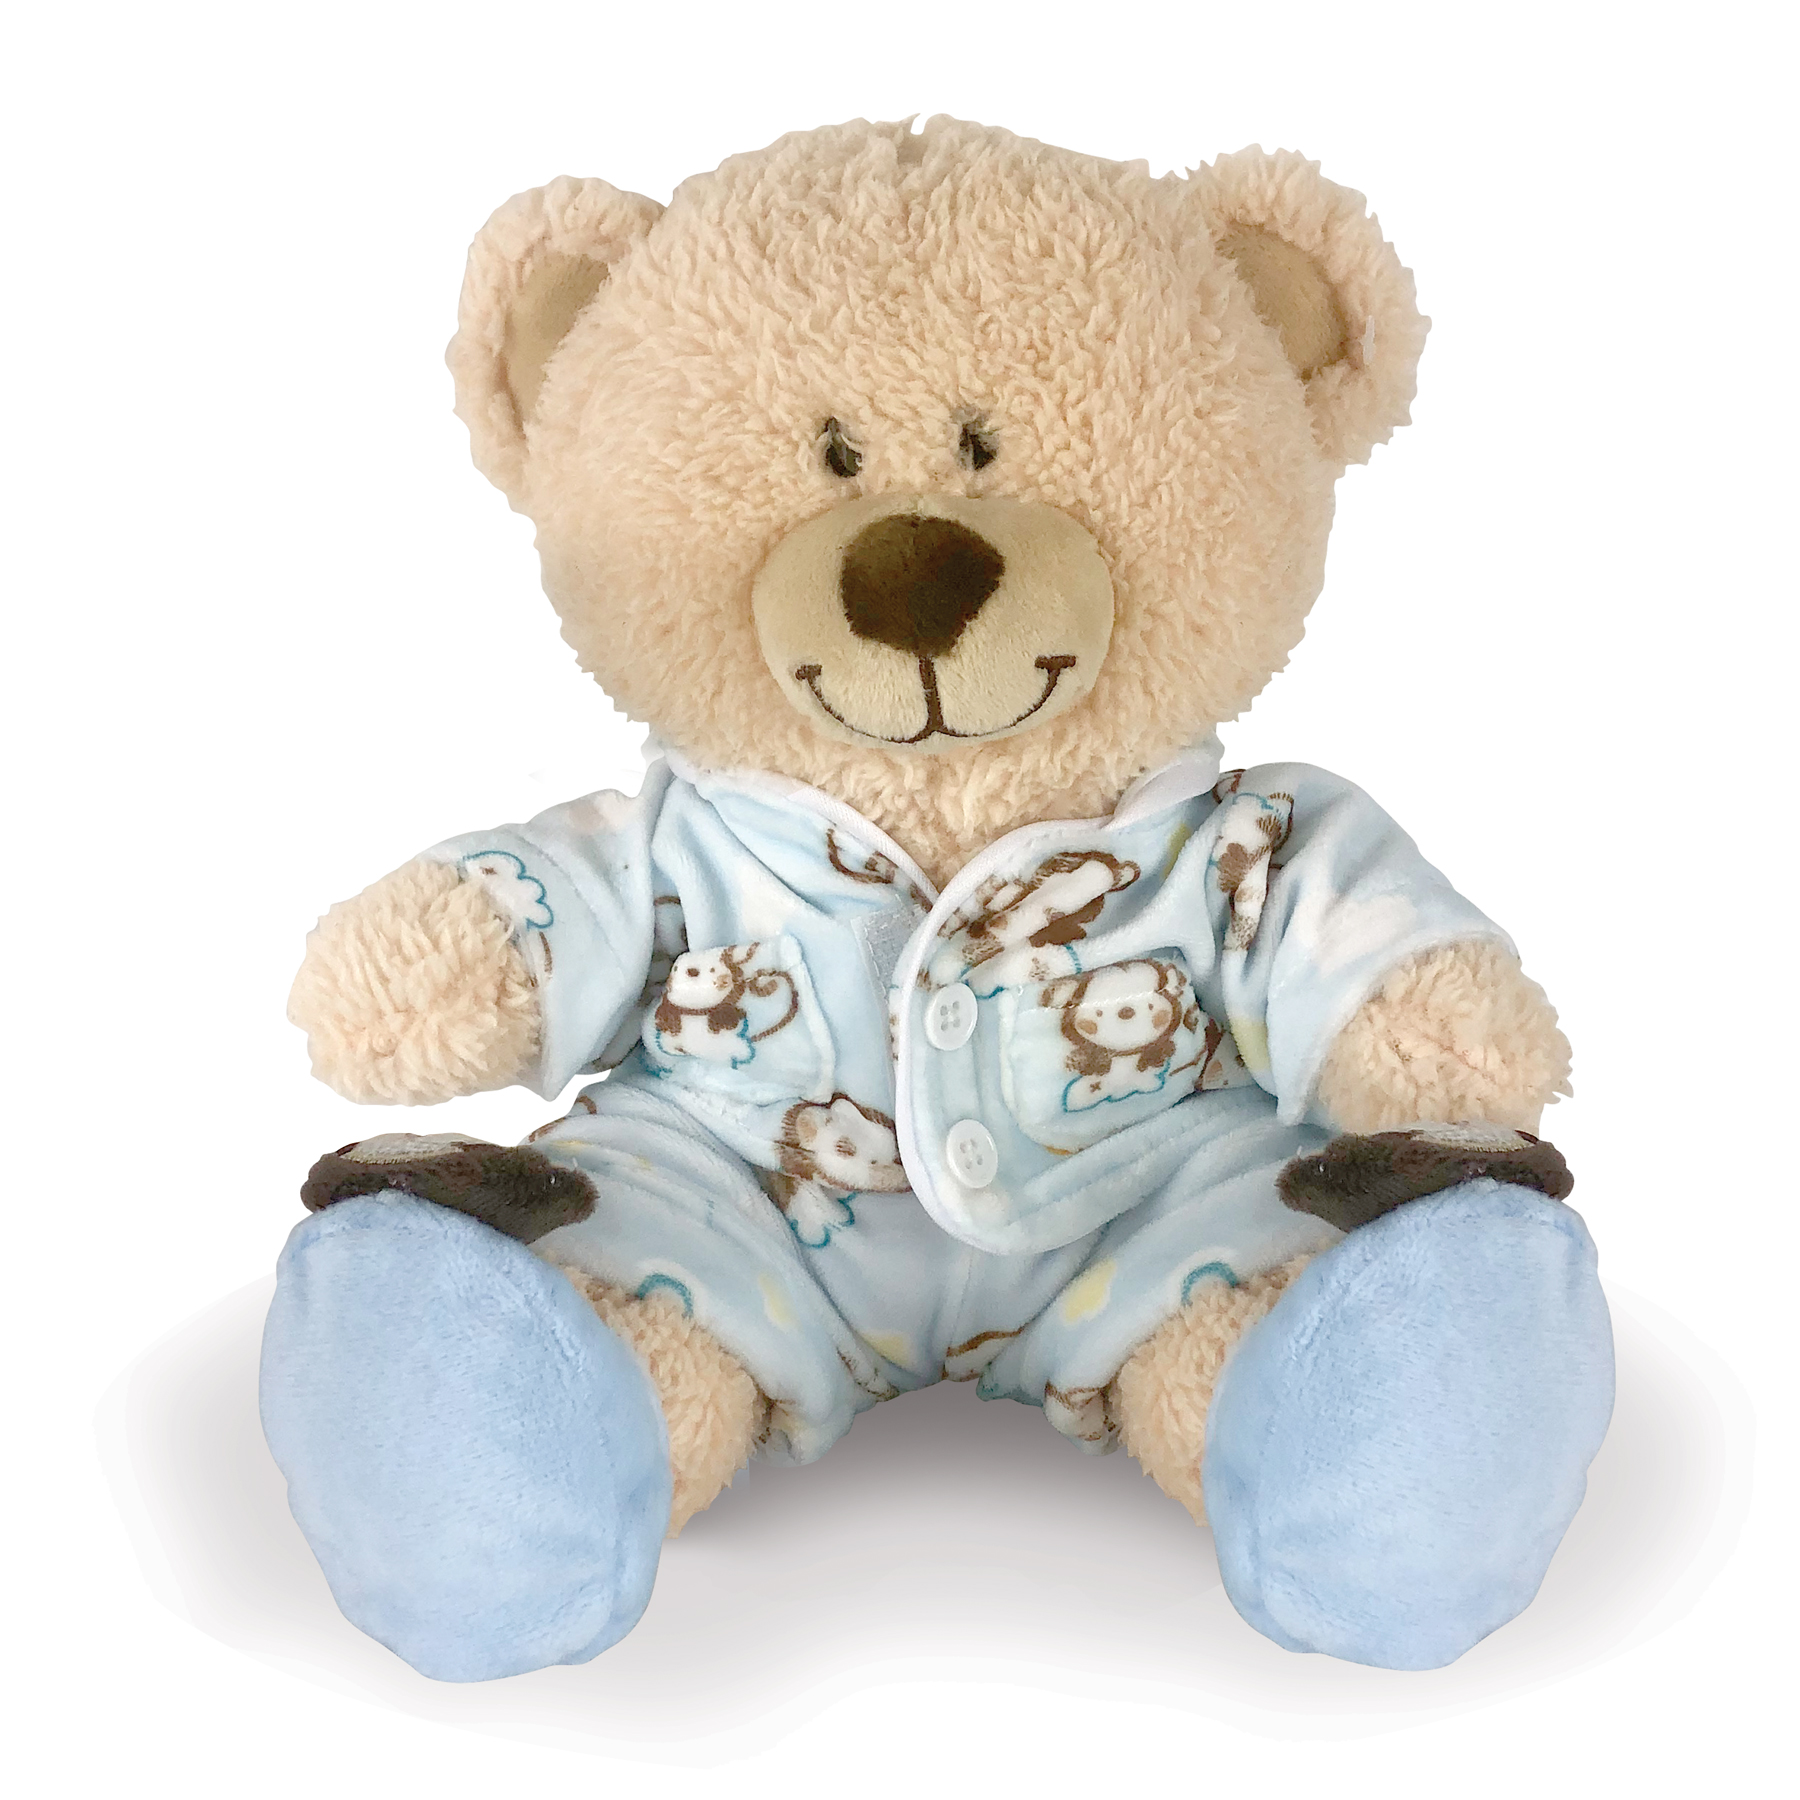 Pajamas for Stuffed Animals | Monkey Pajamas For Teddy Bear